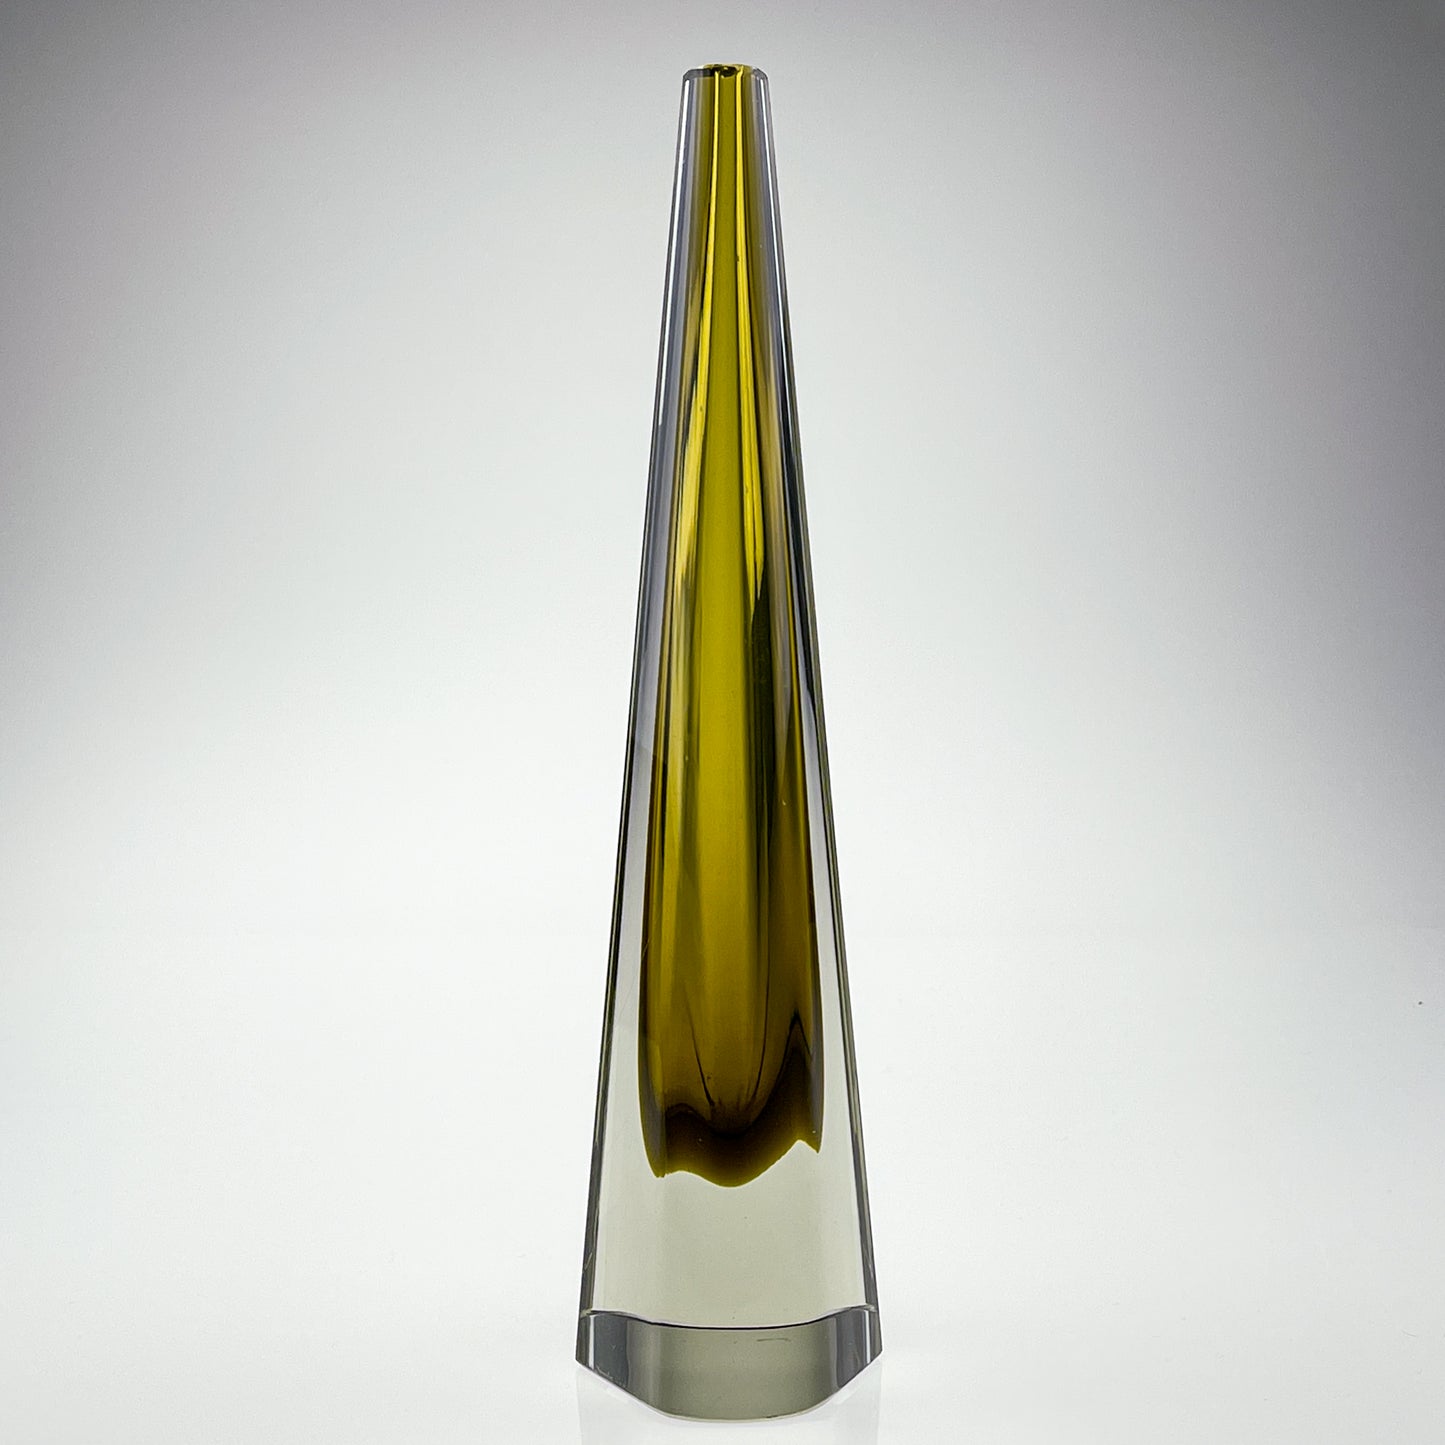 Kaj Franck glass art-object "Obeliski", model KF 246 by Nuutajärvi-Notsjö